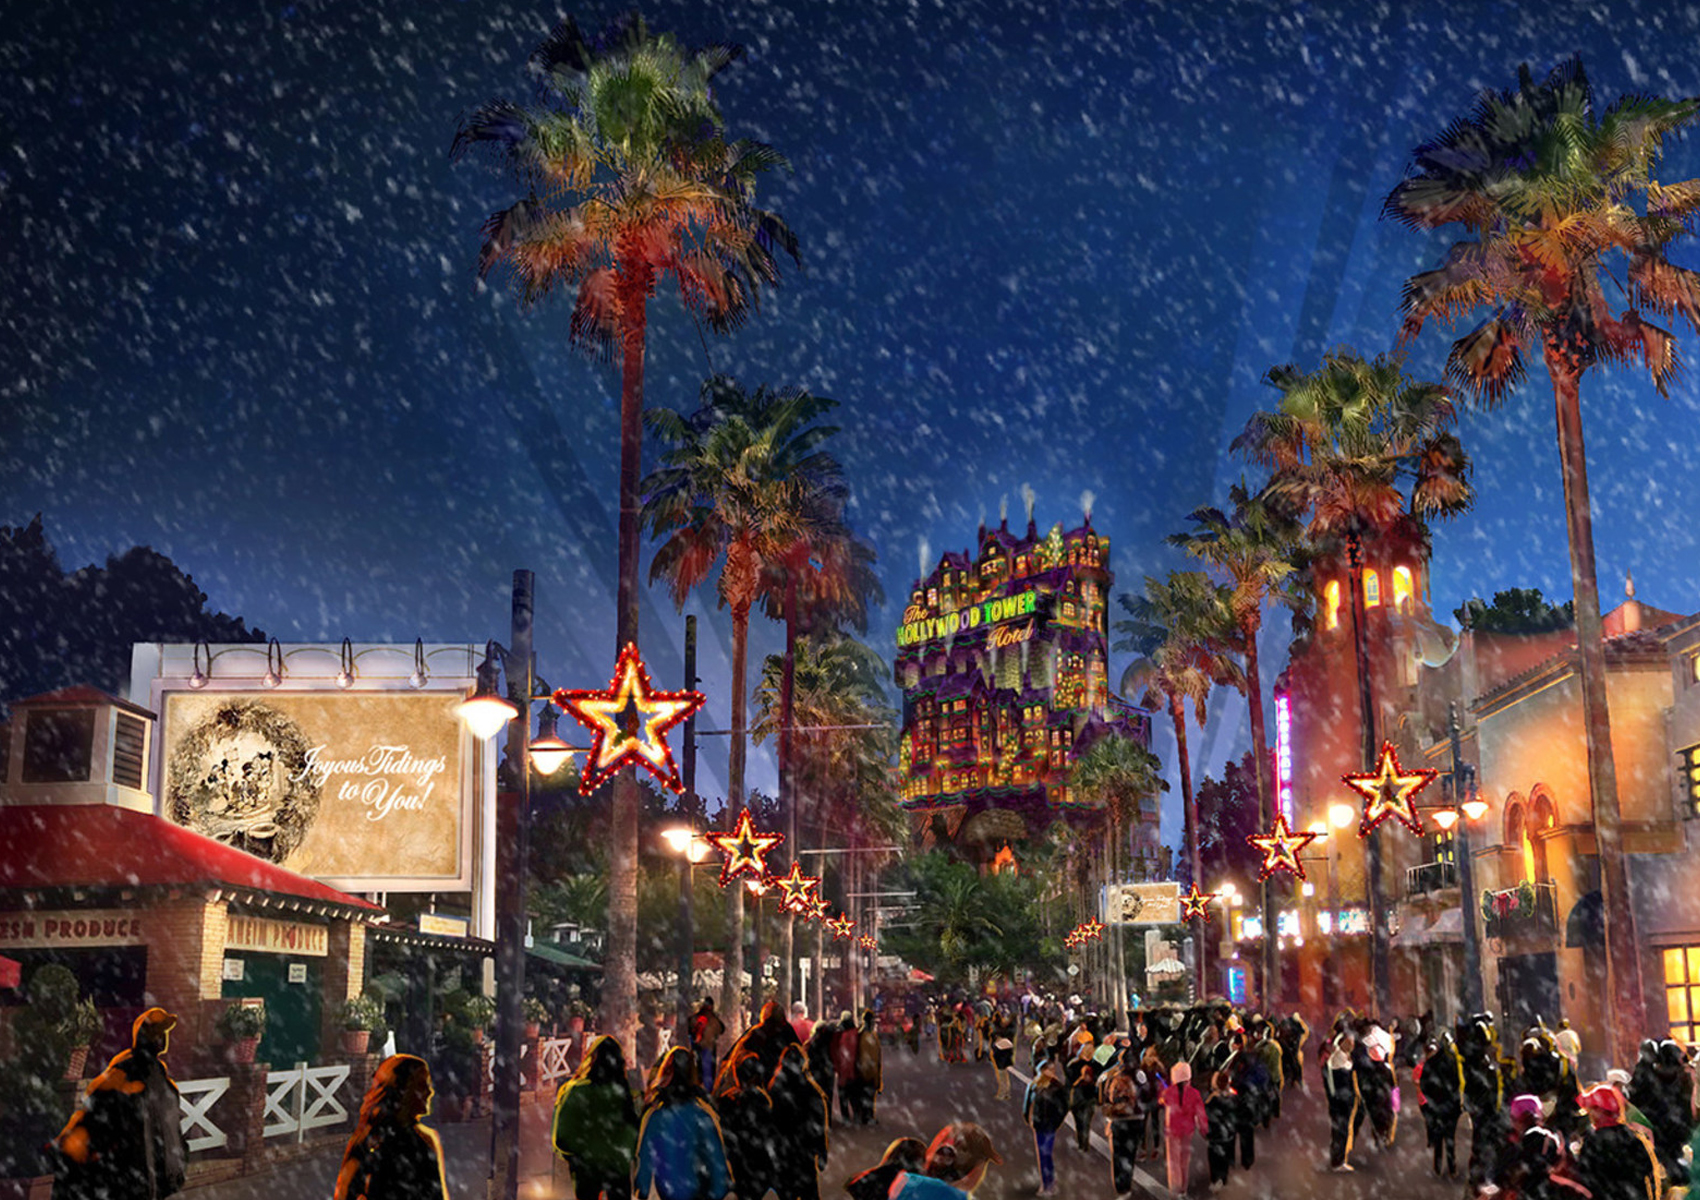 Discover Even More Magic This Holiday Season at Walt Disney World Resort